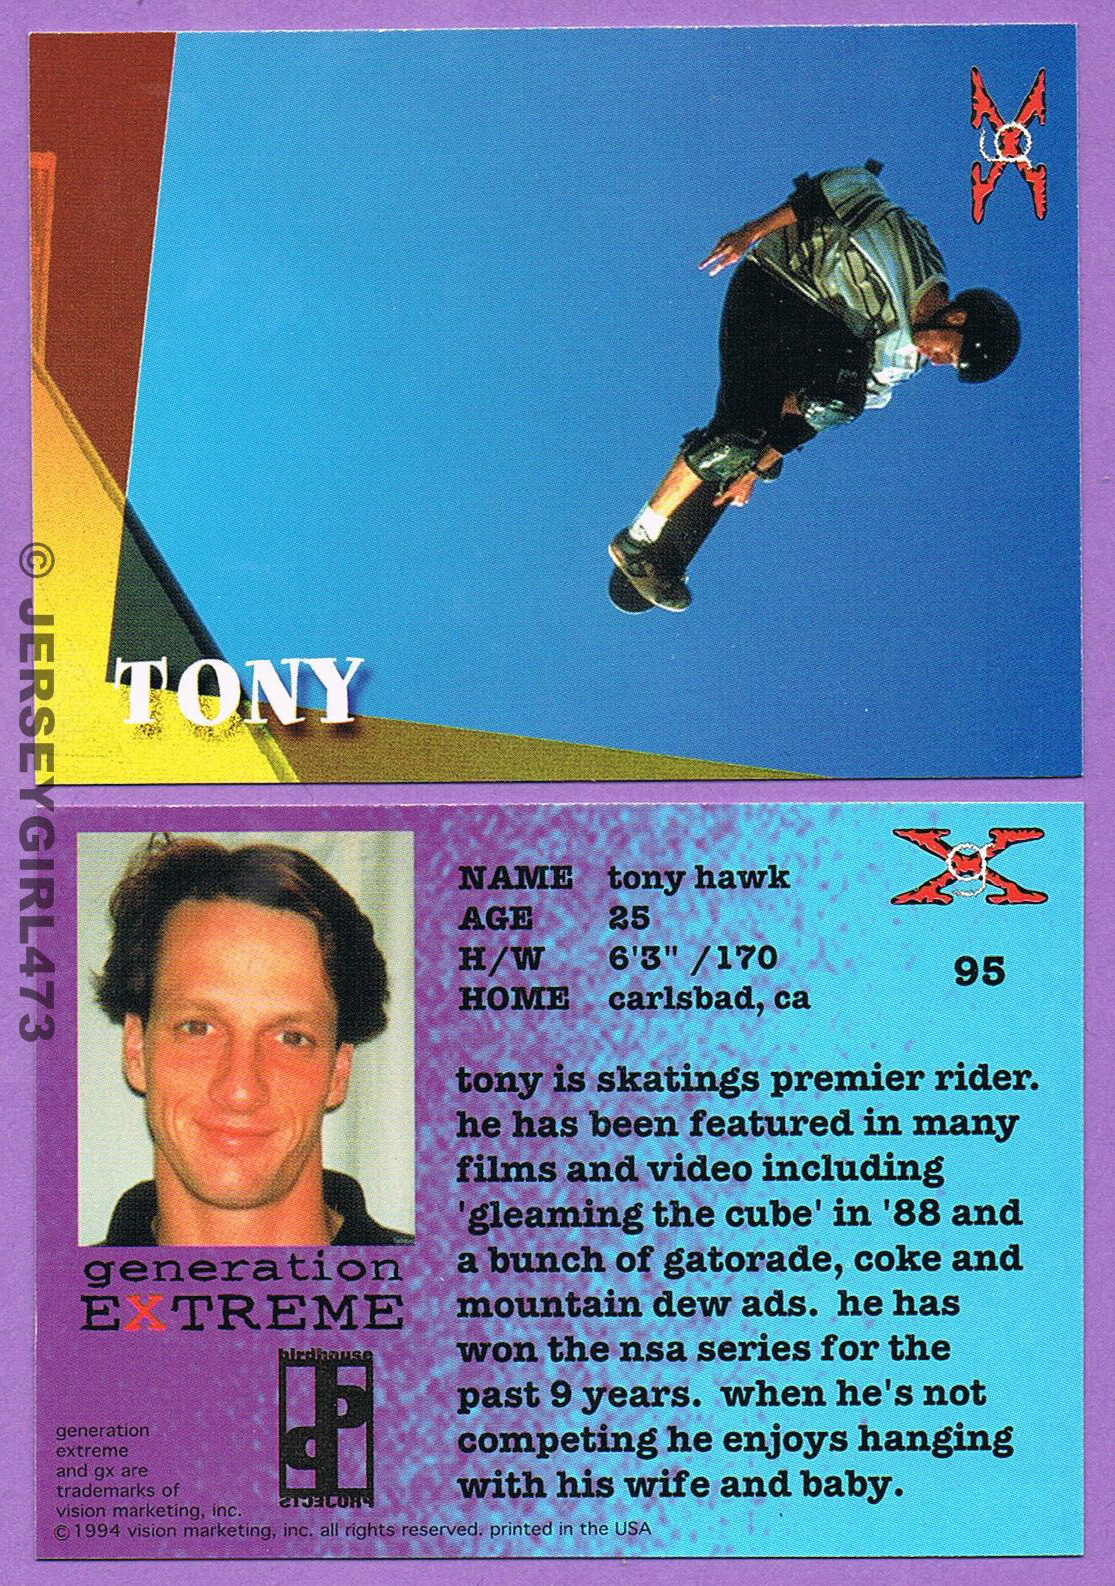 Tony Hawk Generation Extreme Skateboarding Card - 1994.